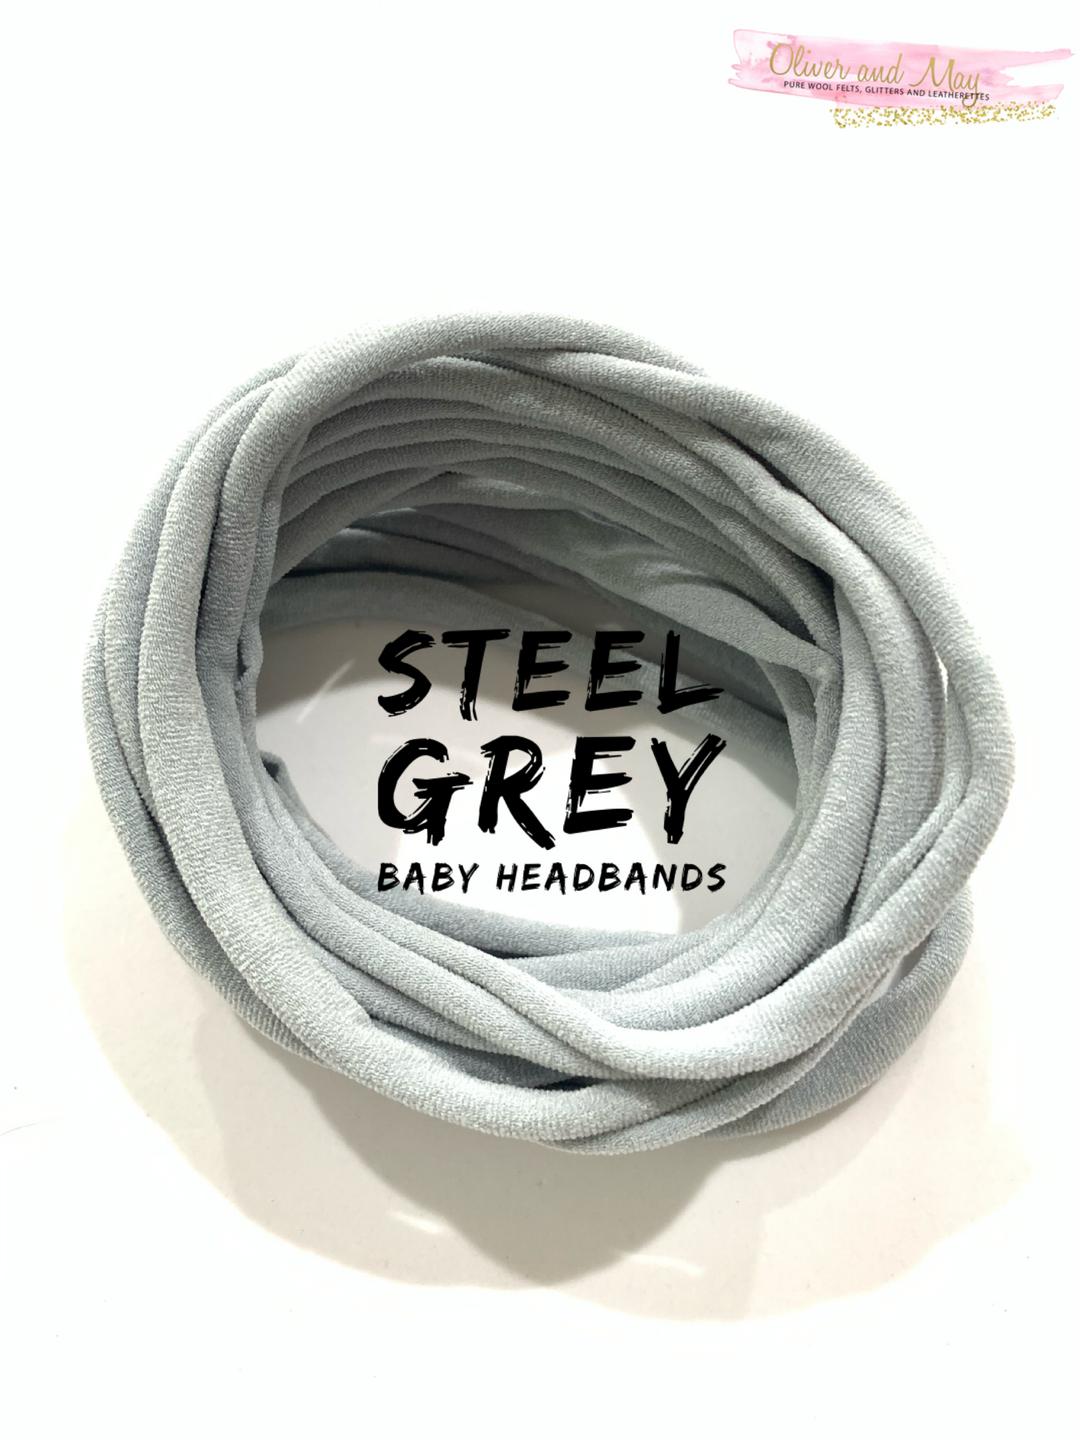 STEEL GREY Nylon Headbands, Soft Nylon Bands, Baby Headbands, DIY Bows, Hair Bow Supplies, DIY Supplies, One Size Fits Most Headbands